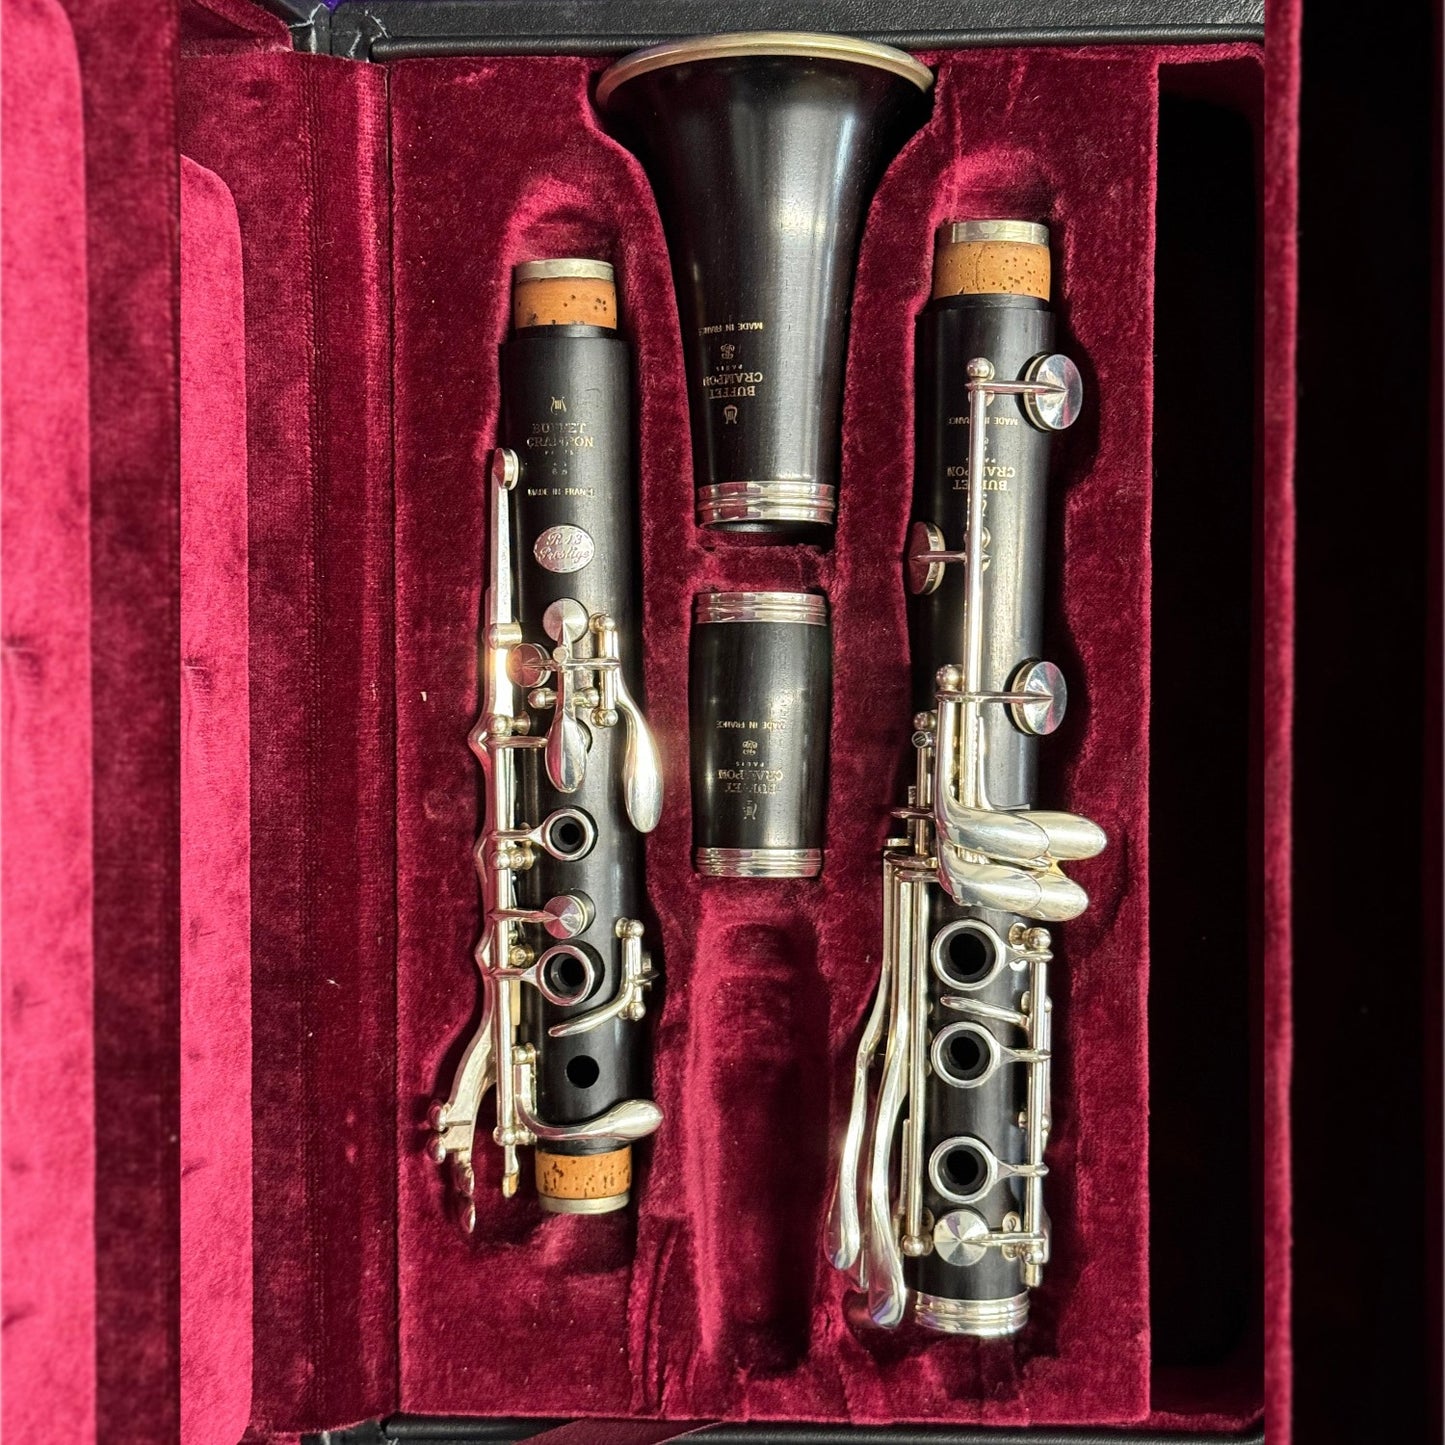 Buffet R13 Prestige clarinet laying in case